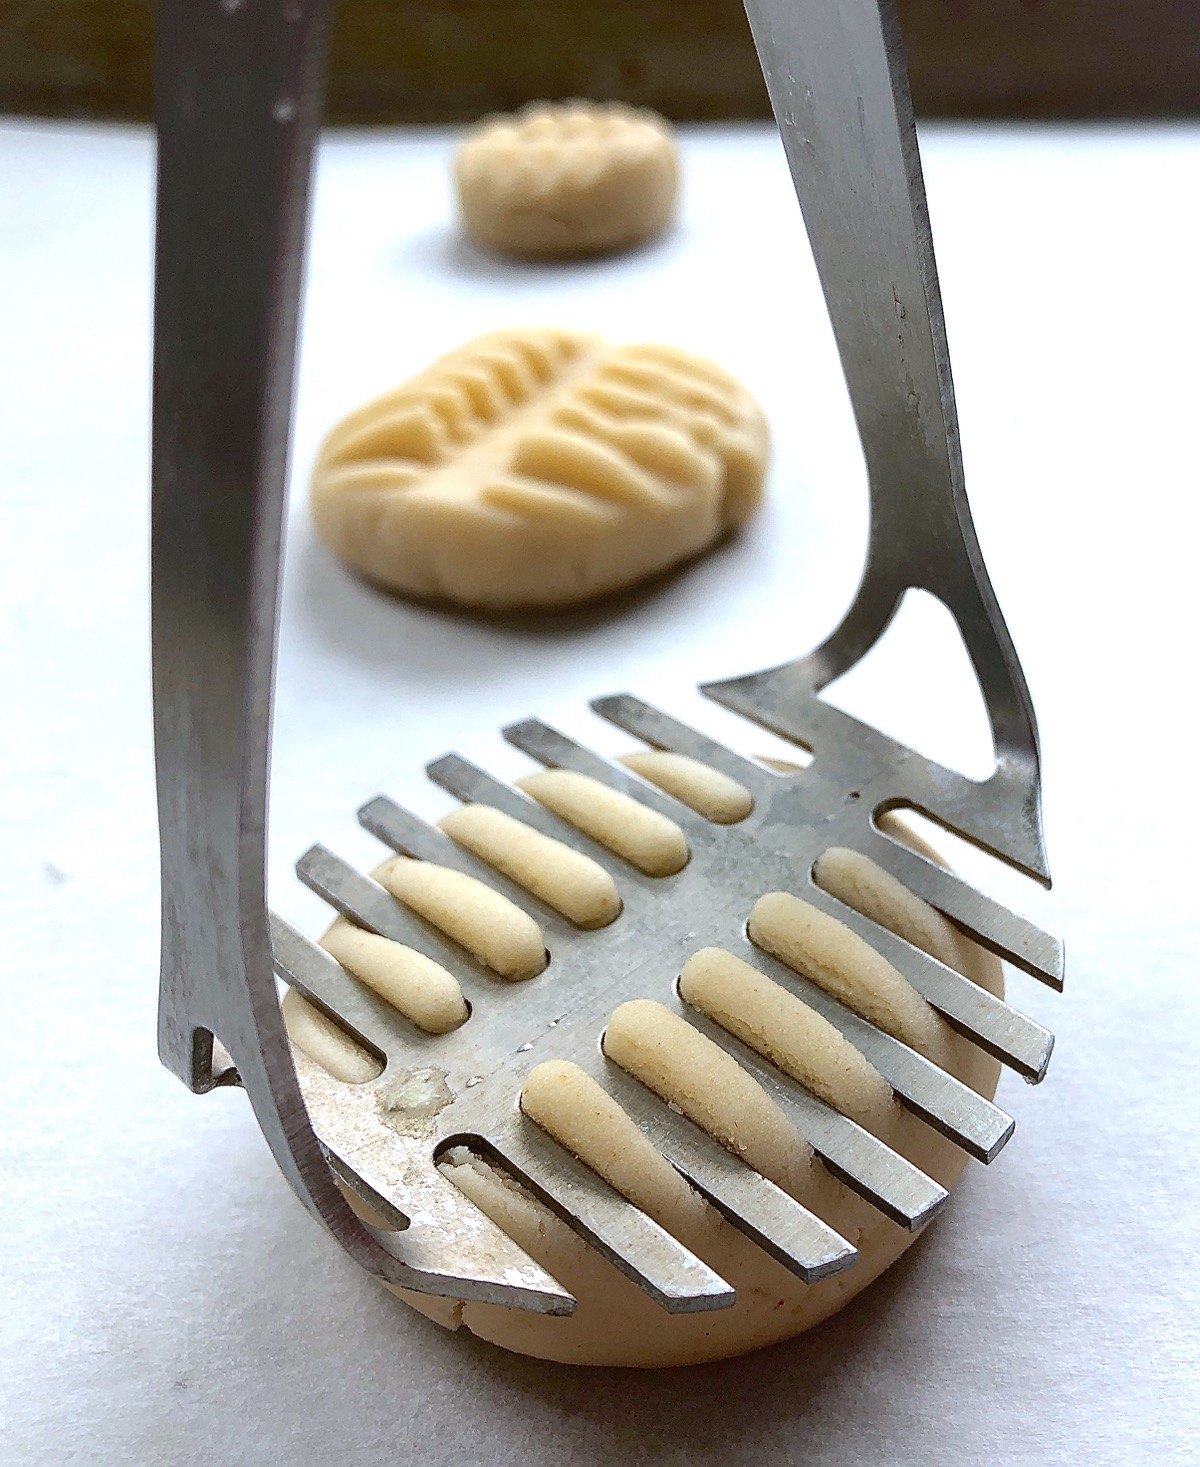 Using a potato masher to flatten a ball of shortbread cookie dough.